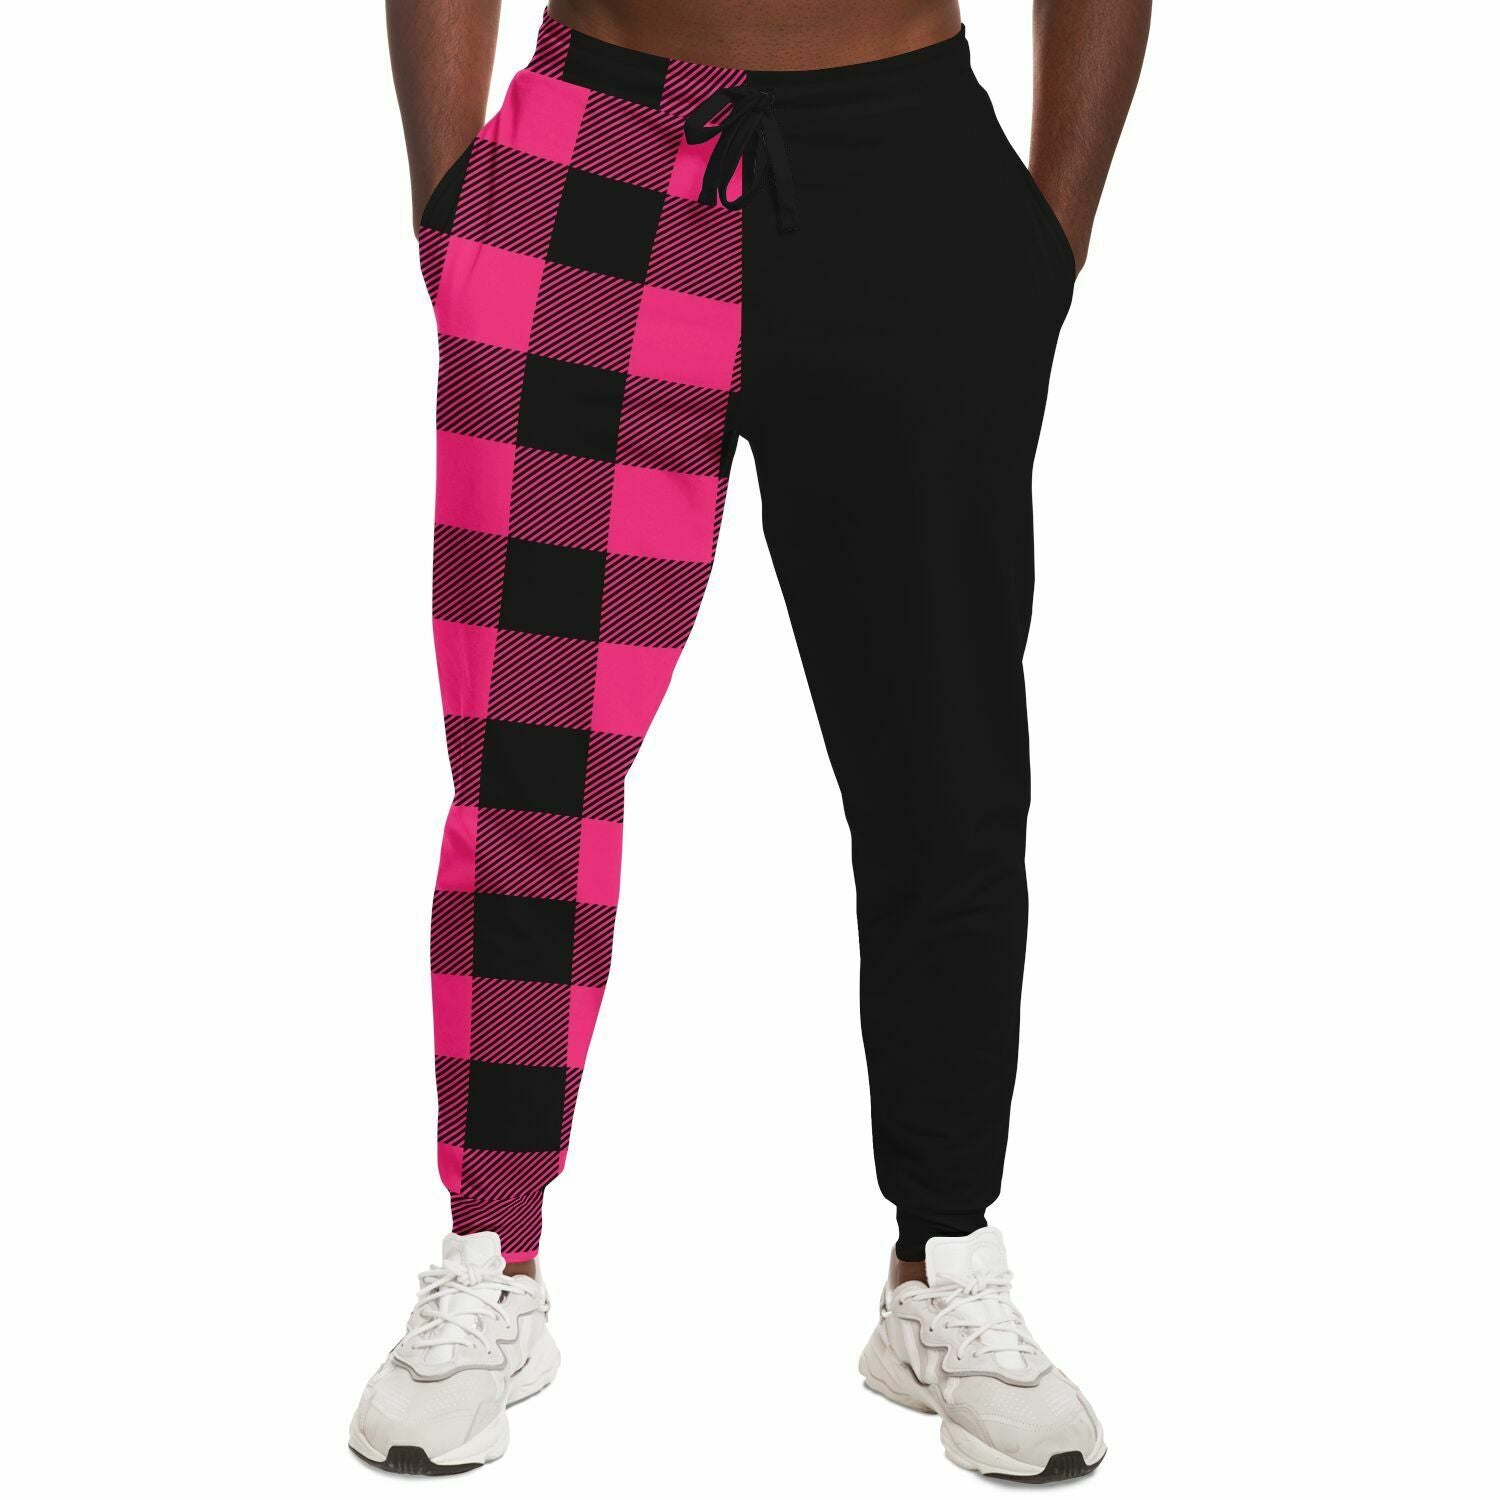 Unisex Pink Black Plaid Two-Tone Camouflage Athletic Joggers